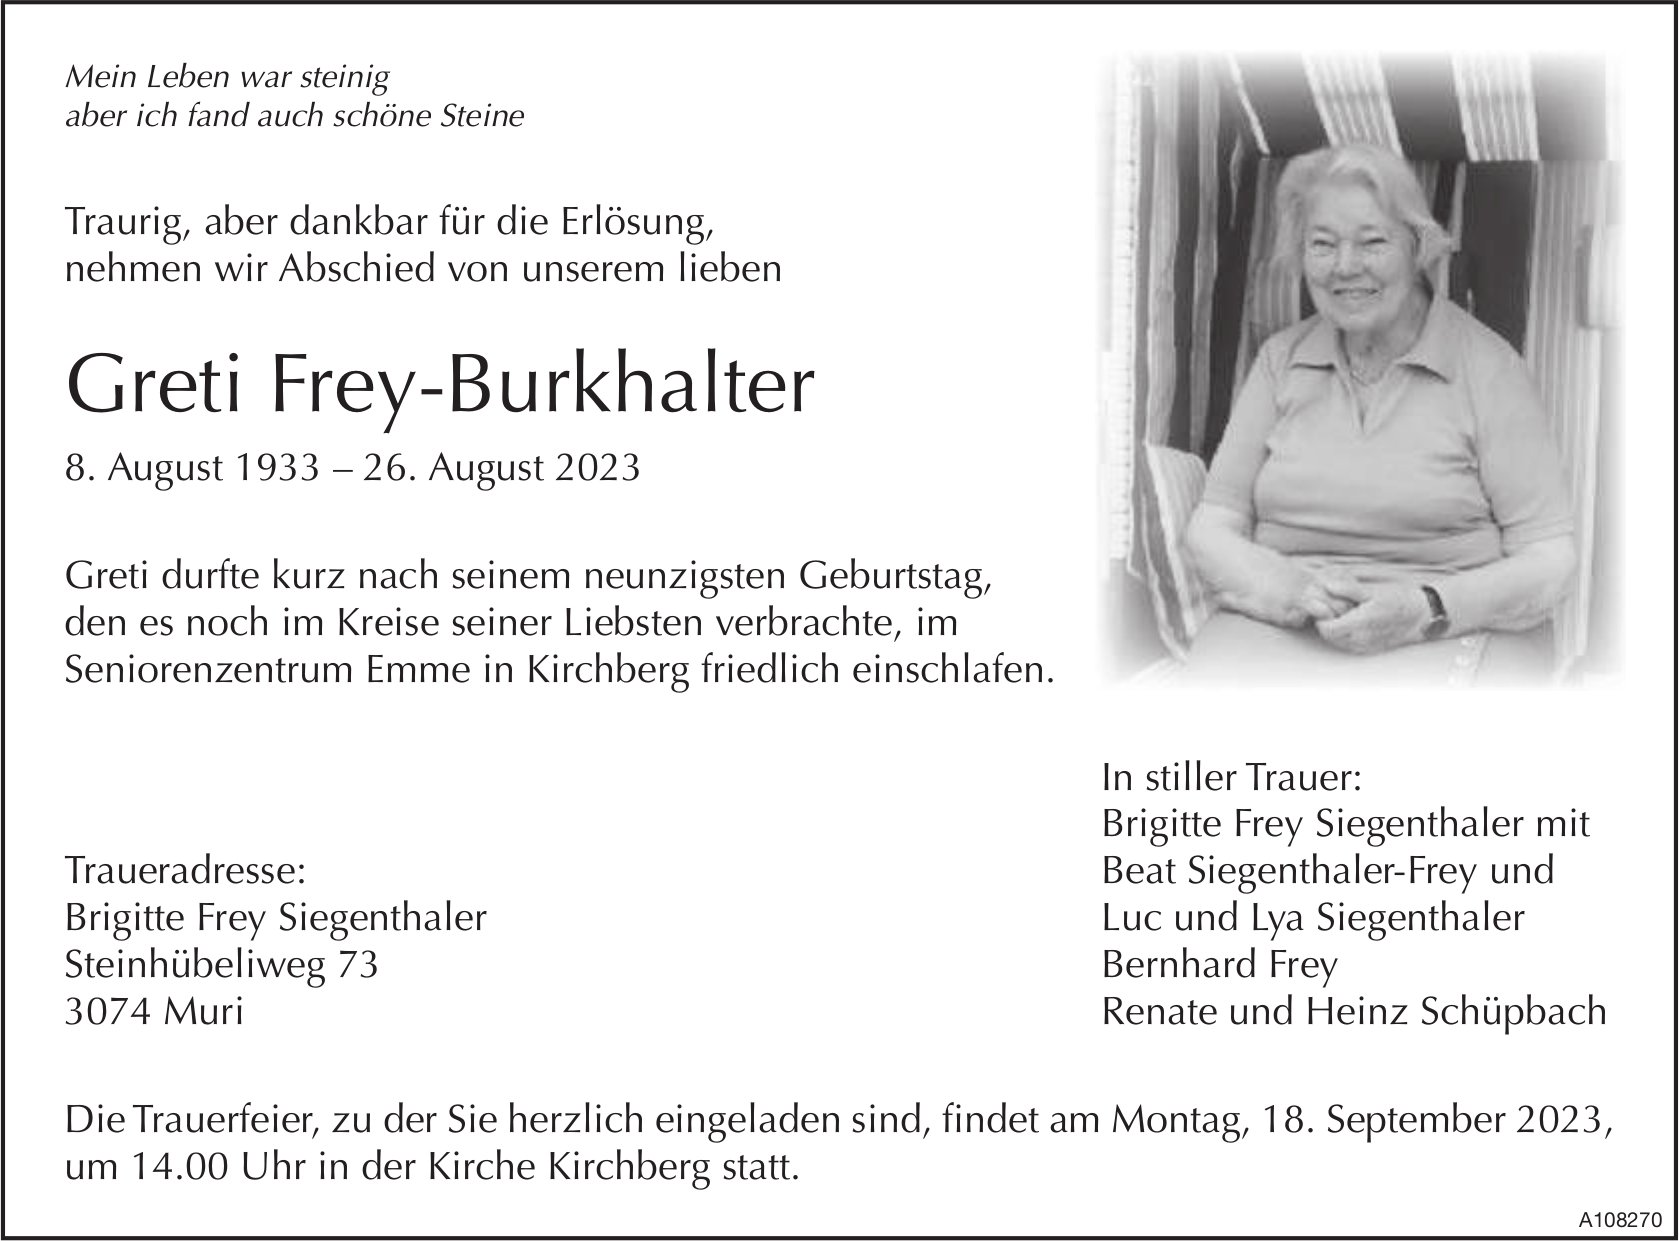 Greti Frey-Burkhalter, August 2023 / TA